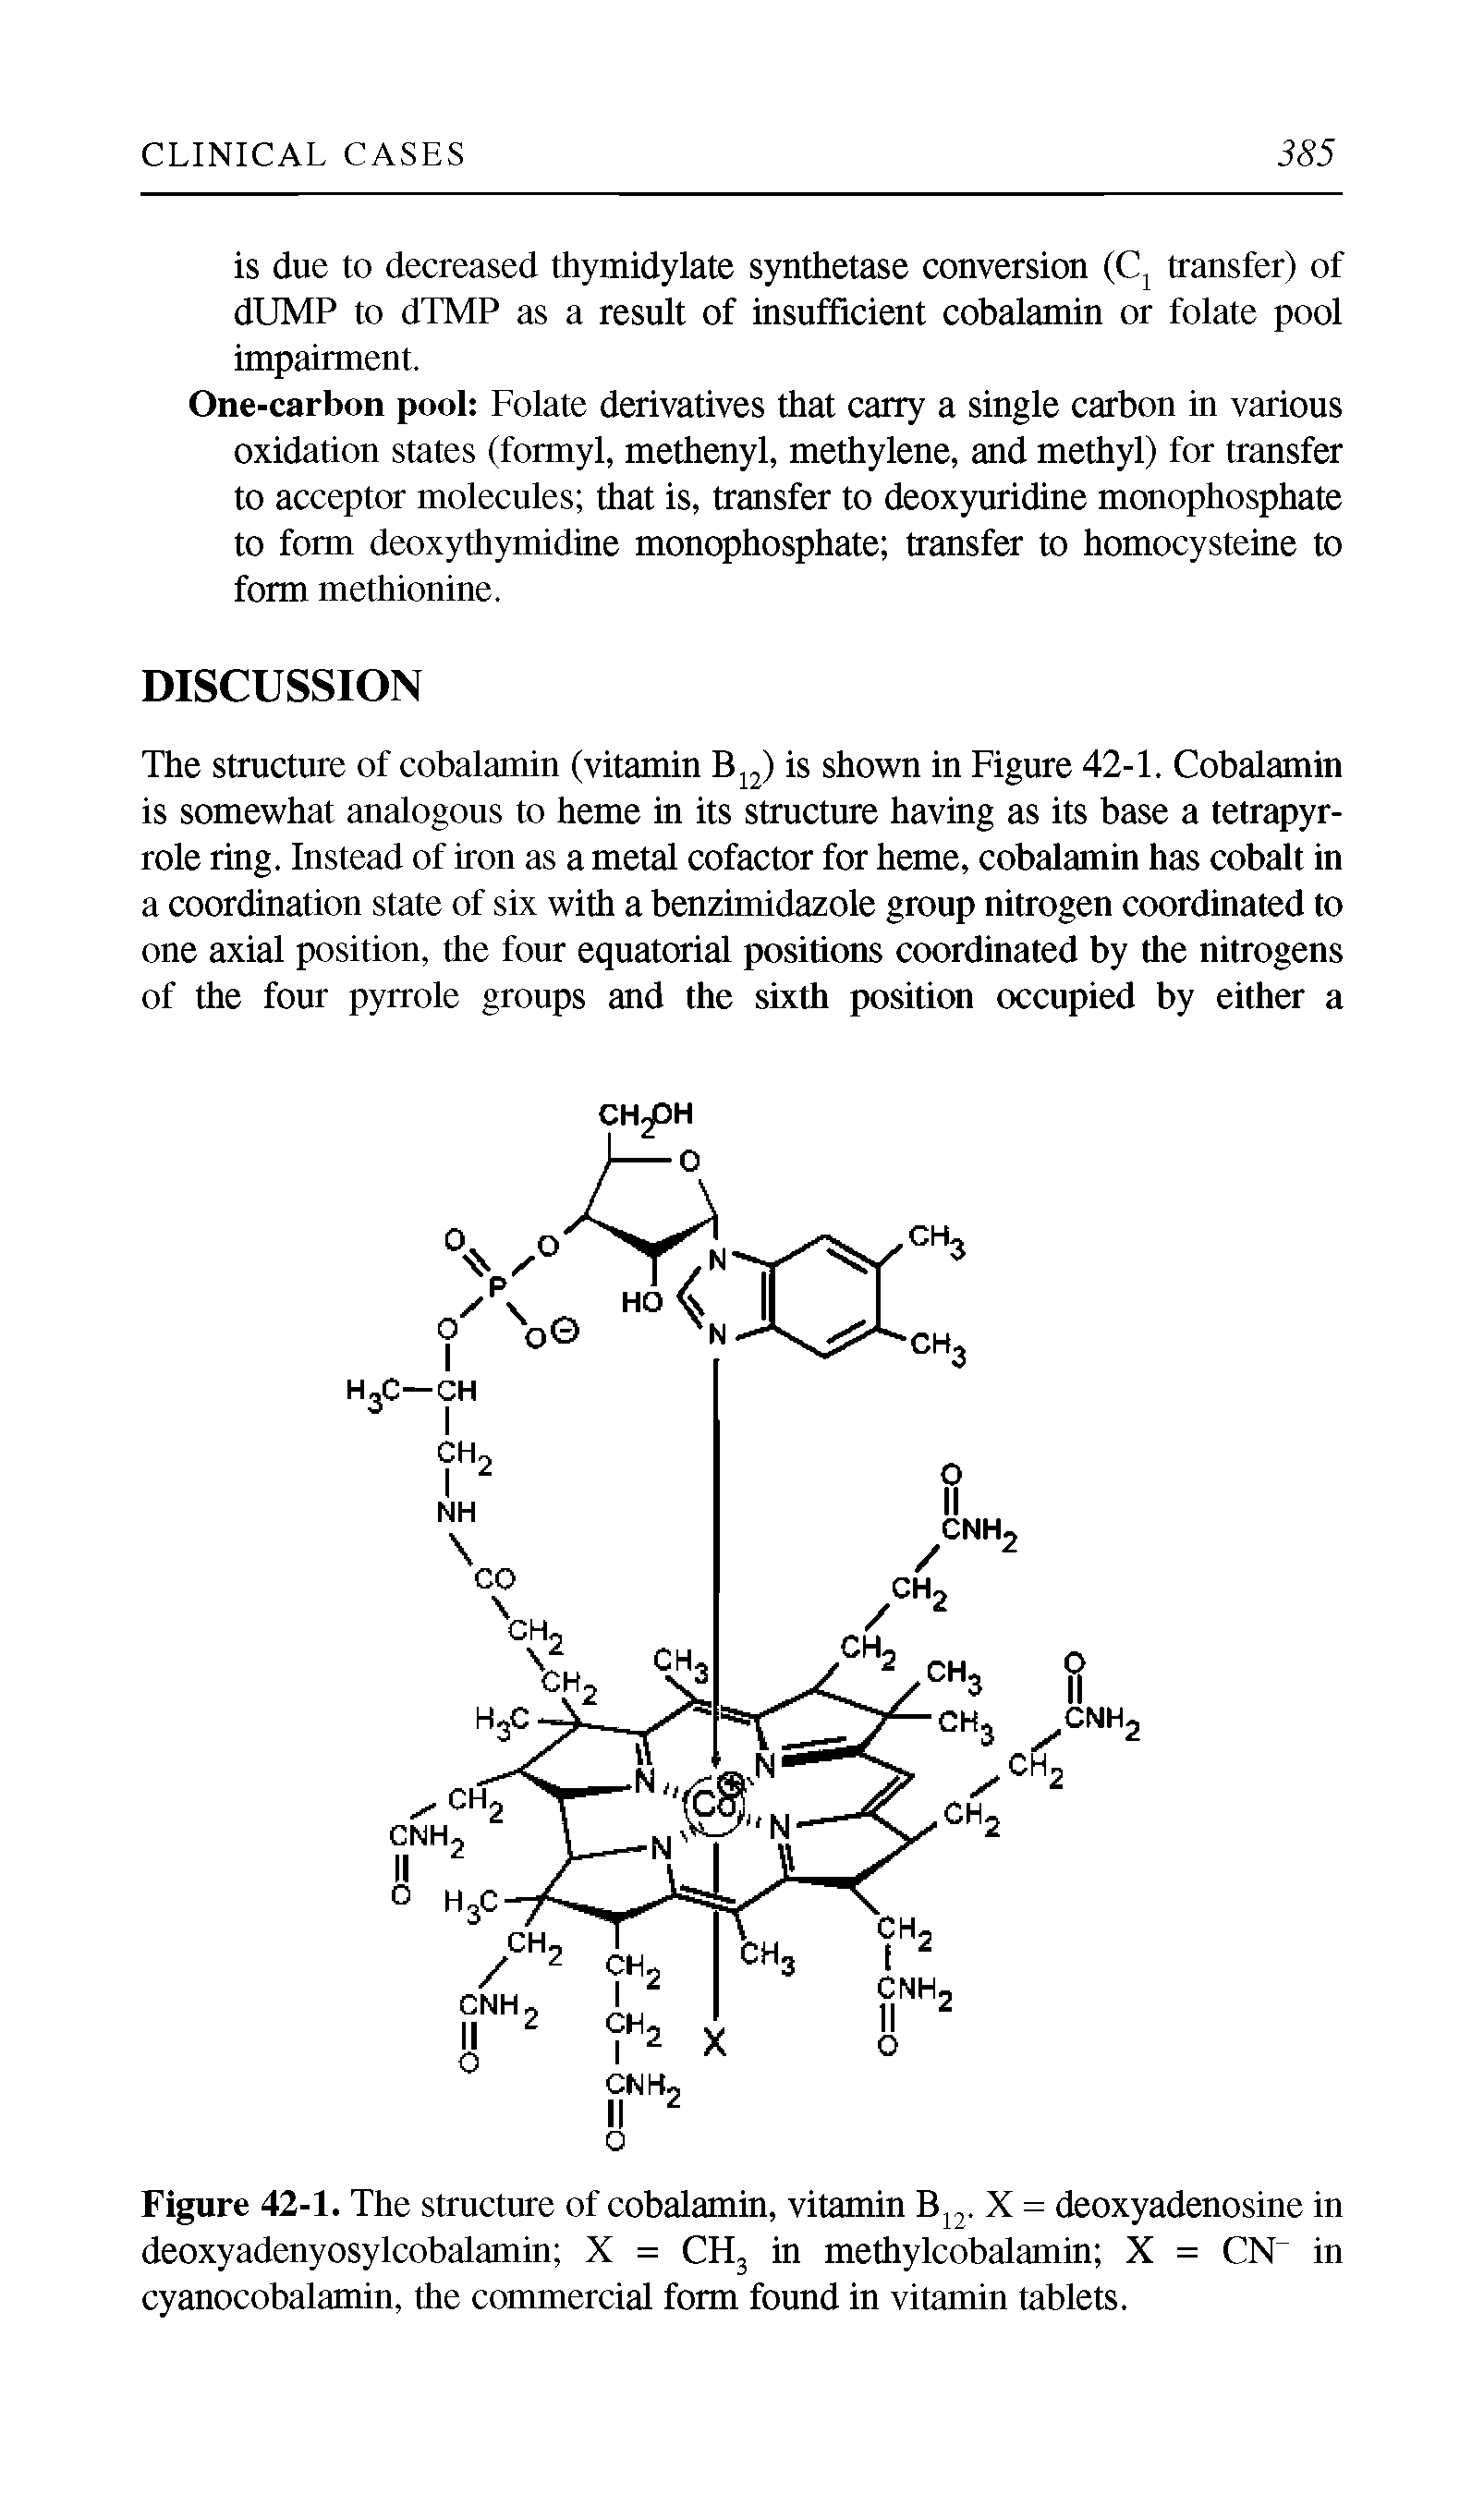 Figure 42-1. The structure of cobalamin, vitamin X = deoxyadenosine in deoxyadenyosylcobalamin X = CHj in methylcobalamin X = CN in cyanocobalamin, the commercial form found in vitamin tablets.